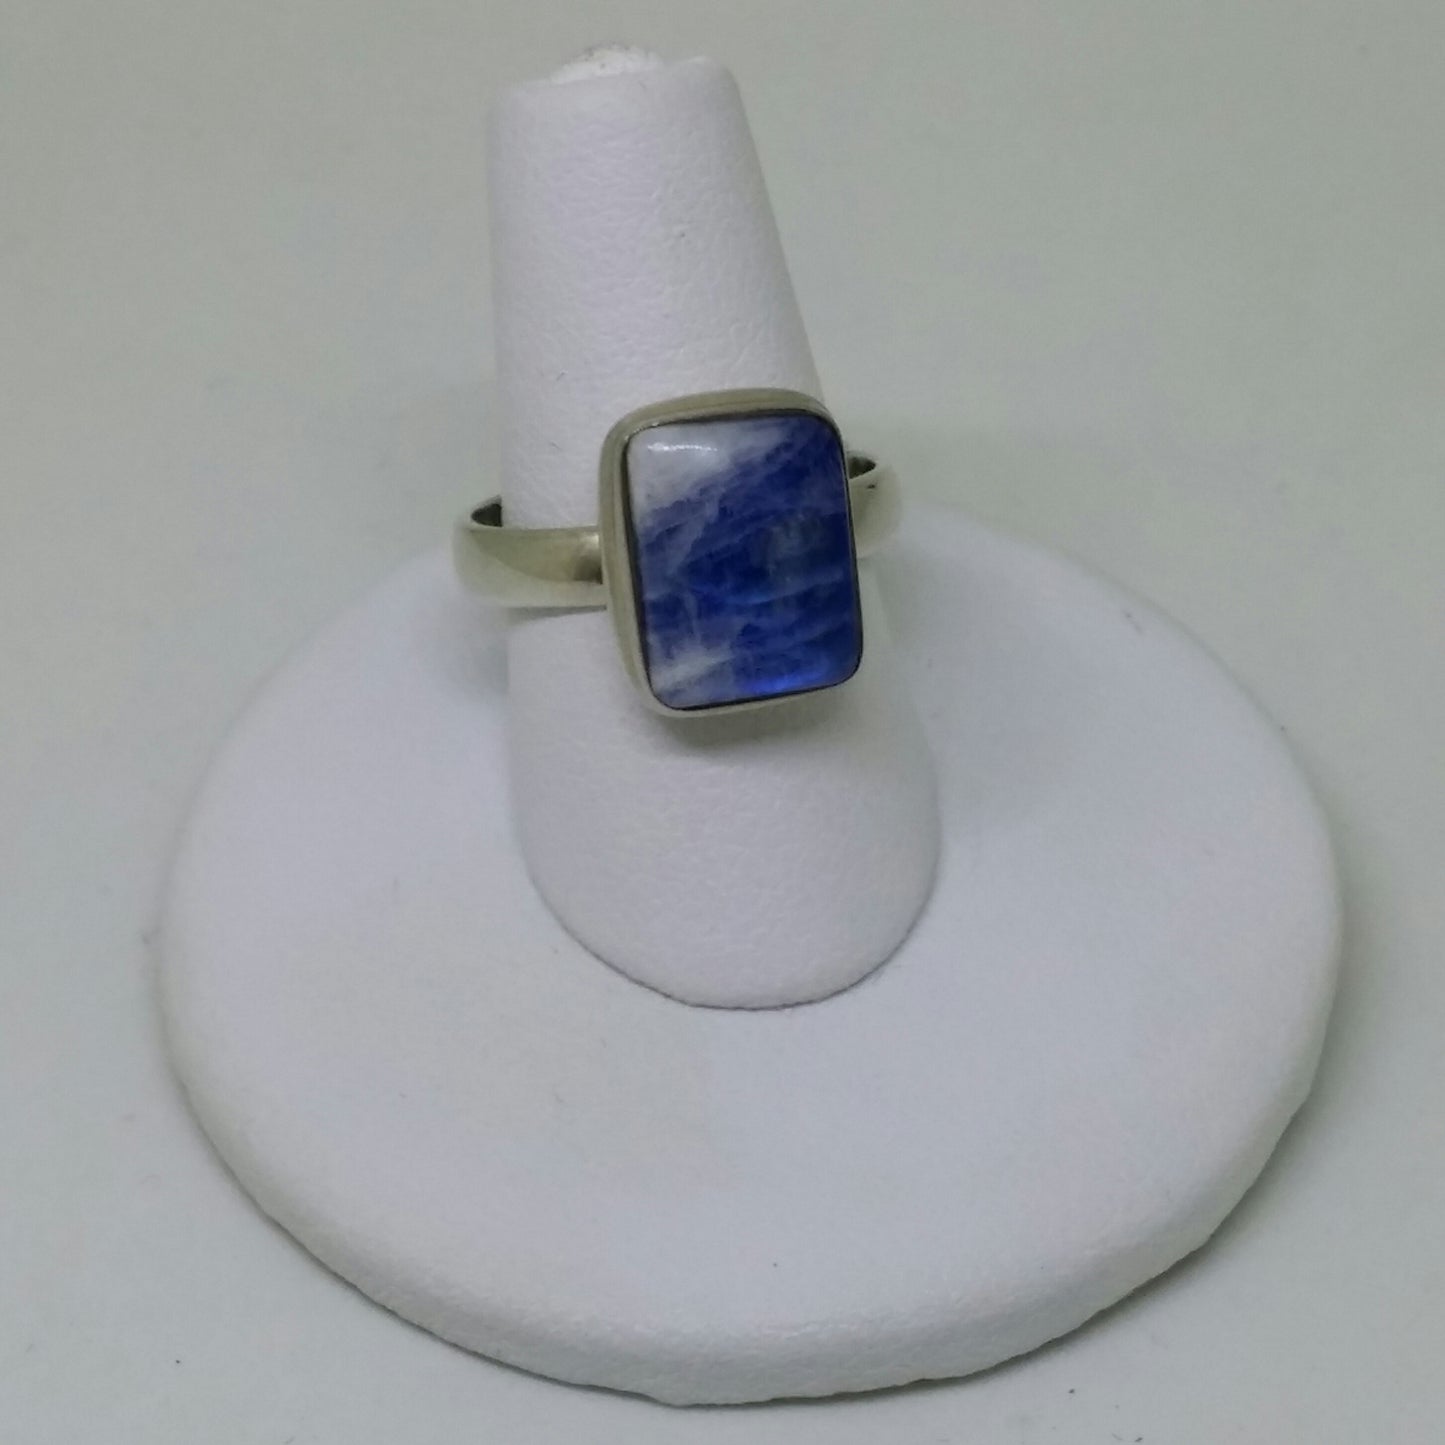 RECTANGULAR BLUE MOONSTONE RING IN A STERLING SILVER BEZEL SETTING-RINGS-Jipsi Junk-JipsiJunk